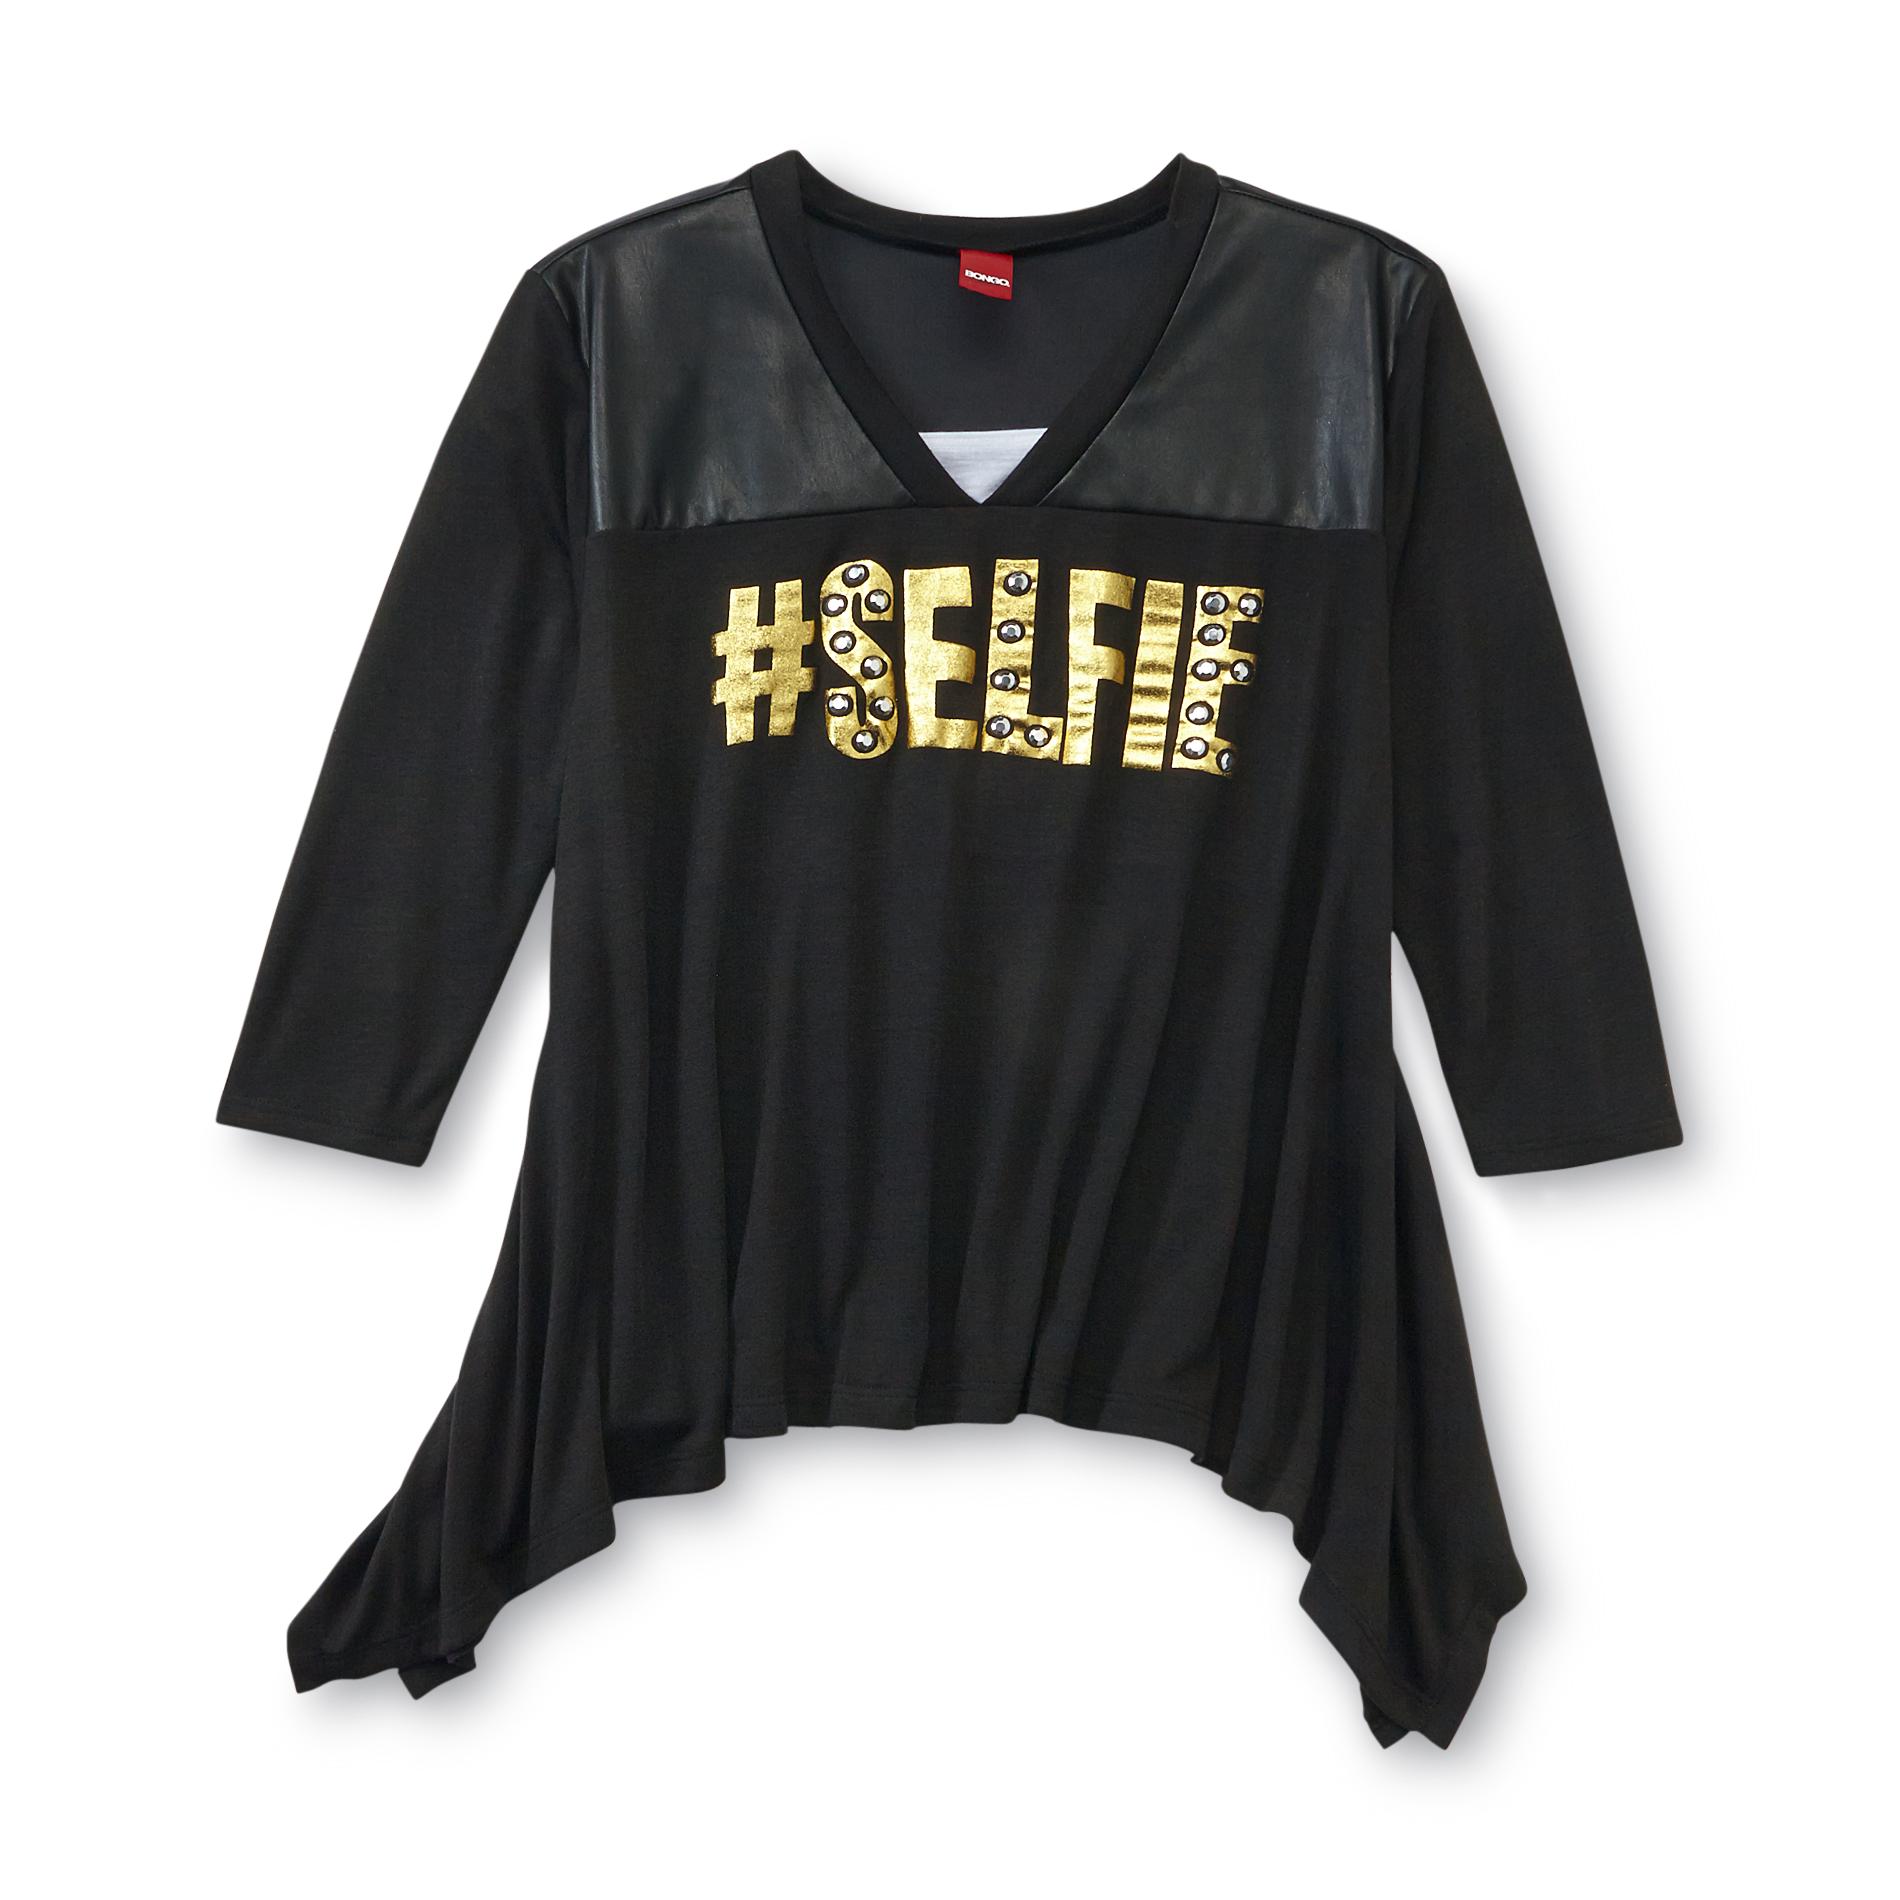 Bongo Girl's Embellished Sharkbite Shirt - #Selfie